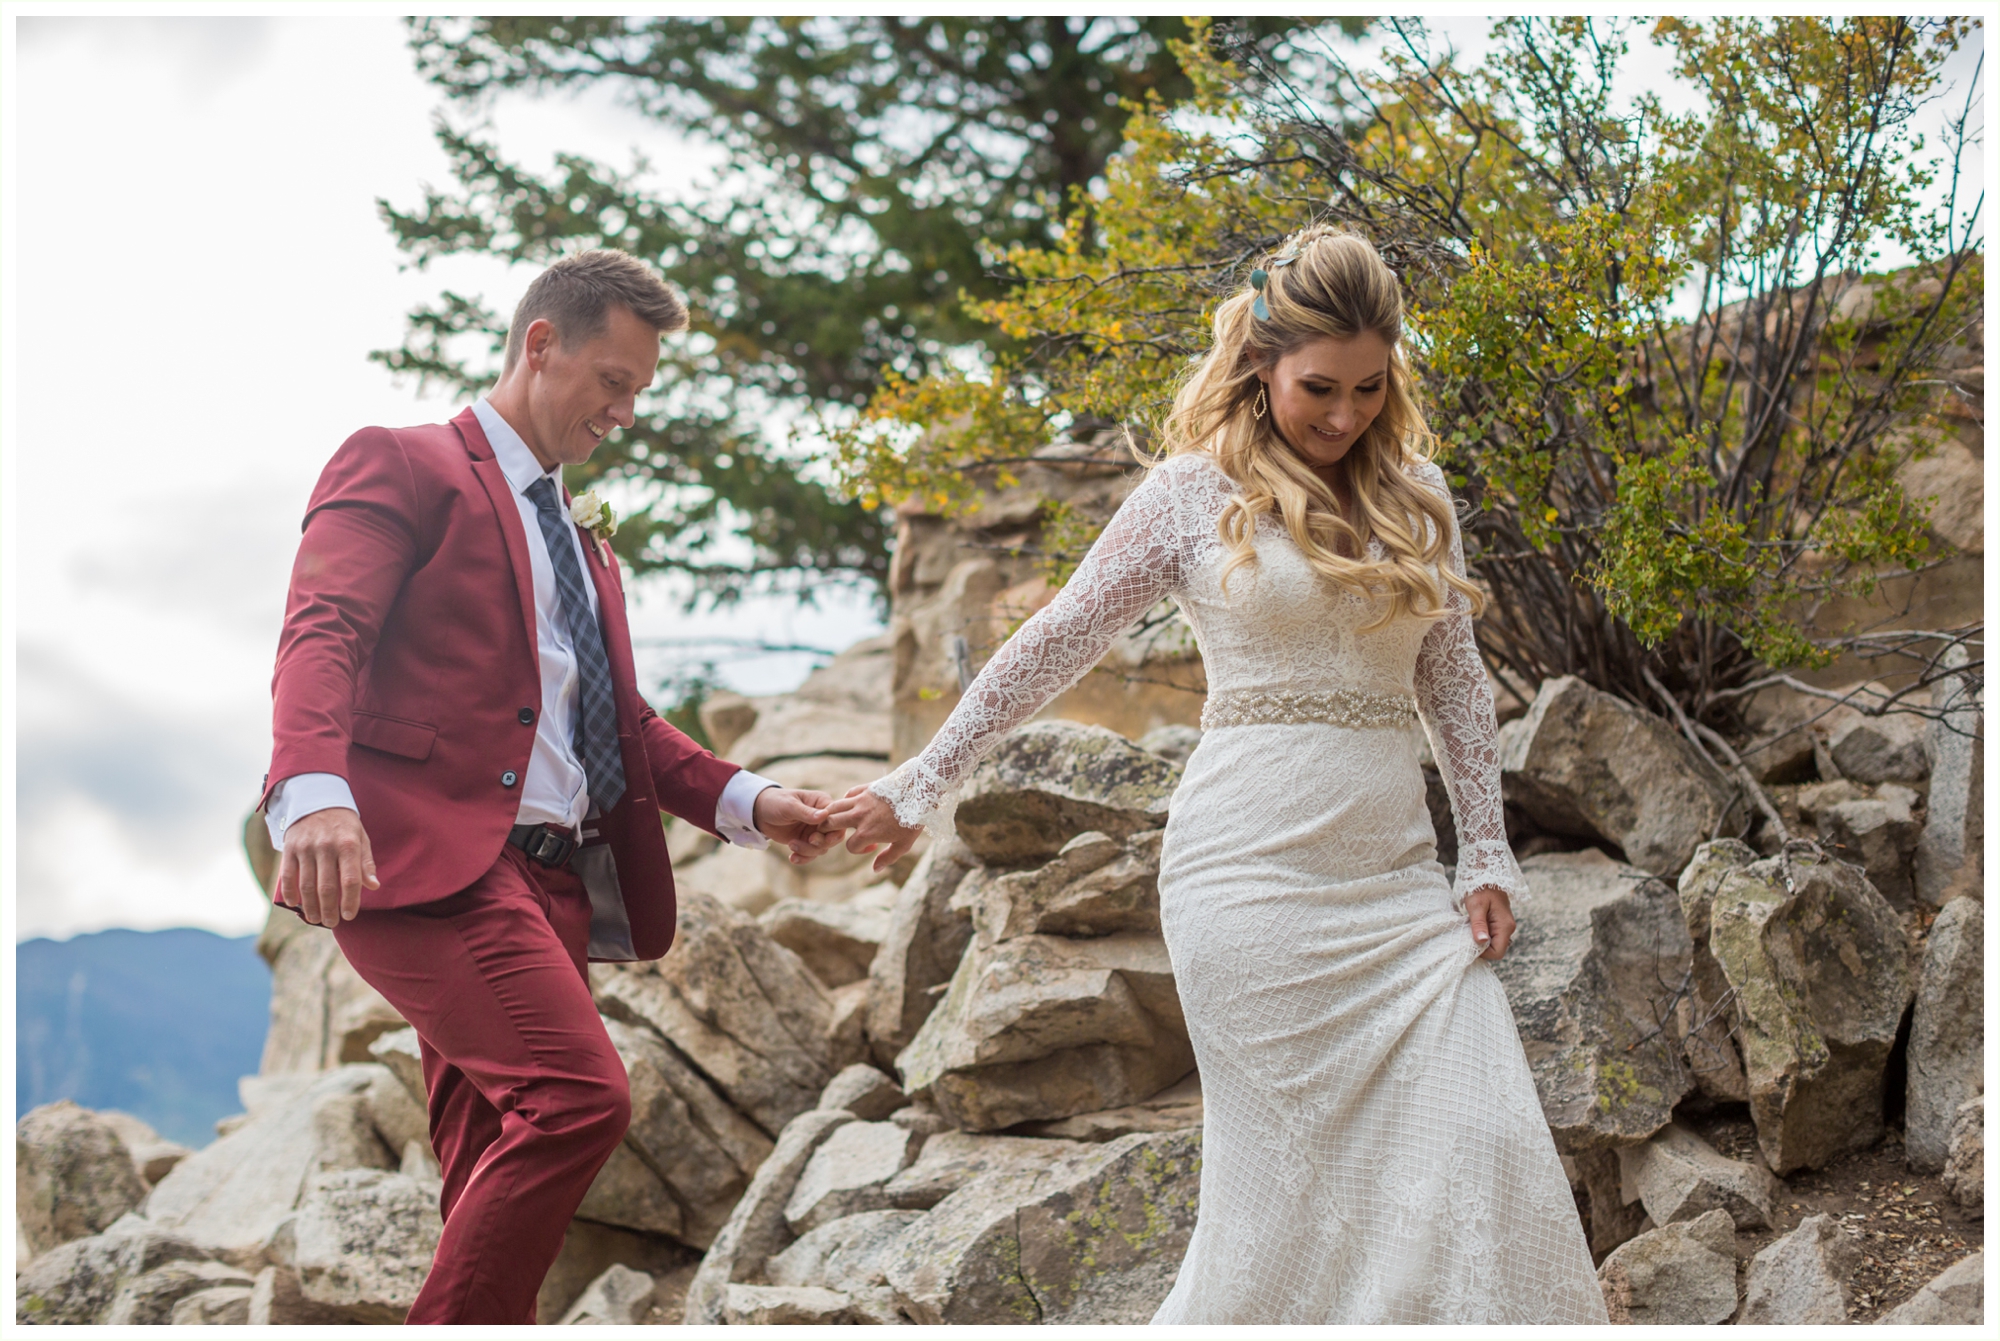 sapphire point overlook wedding portraits on the rocks groom maroon suit